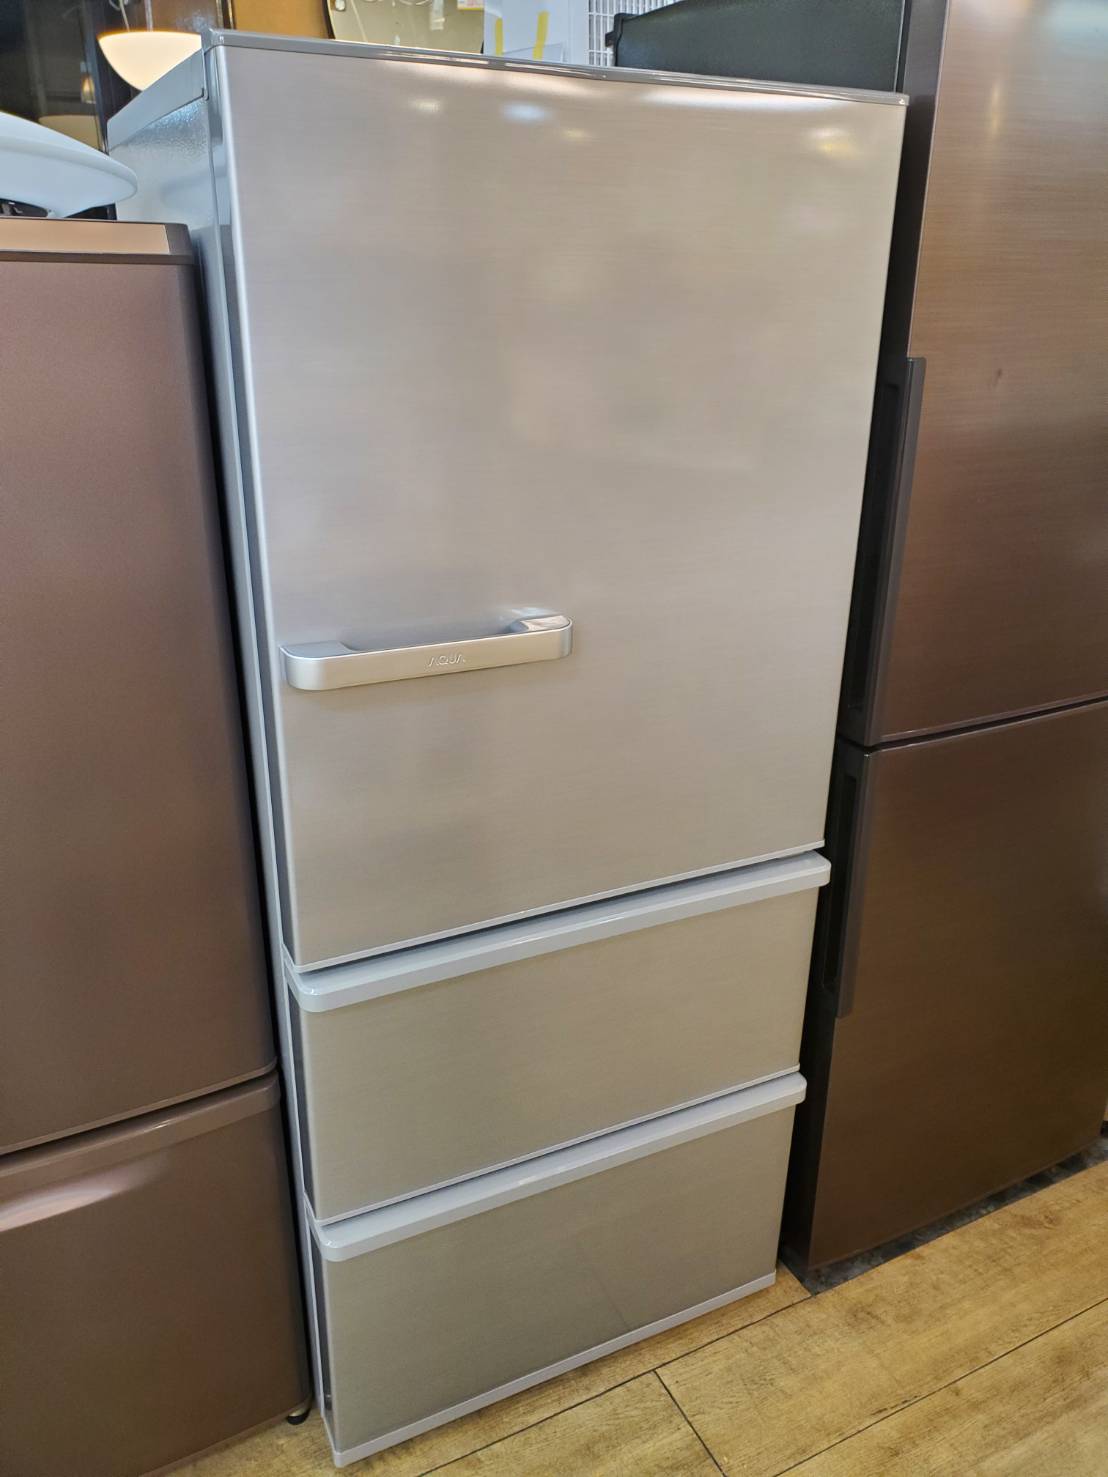 ☆AQUA アクア 272L 3ドア冷蔵庫 2019年製 高年式 冷凍冷蔵庫 買取しま ...